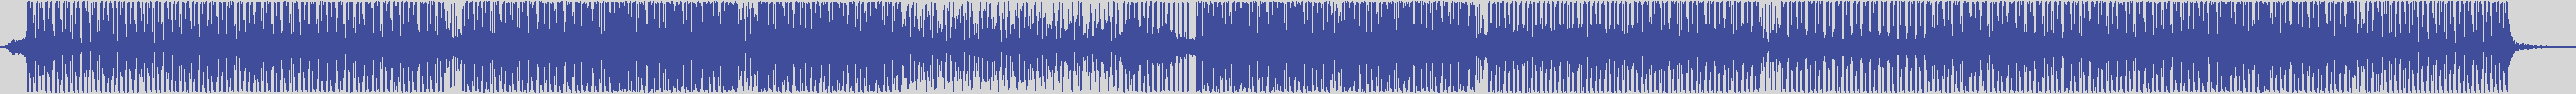 nf_boyz_records [NFY051] Vanguard - Bum Bum [God & Zilla's Tech Mix] audio wave form